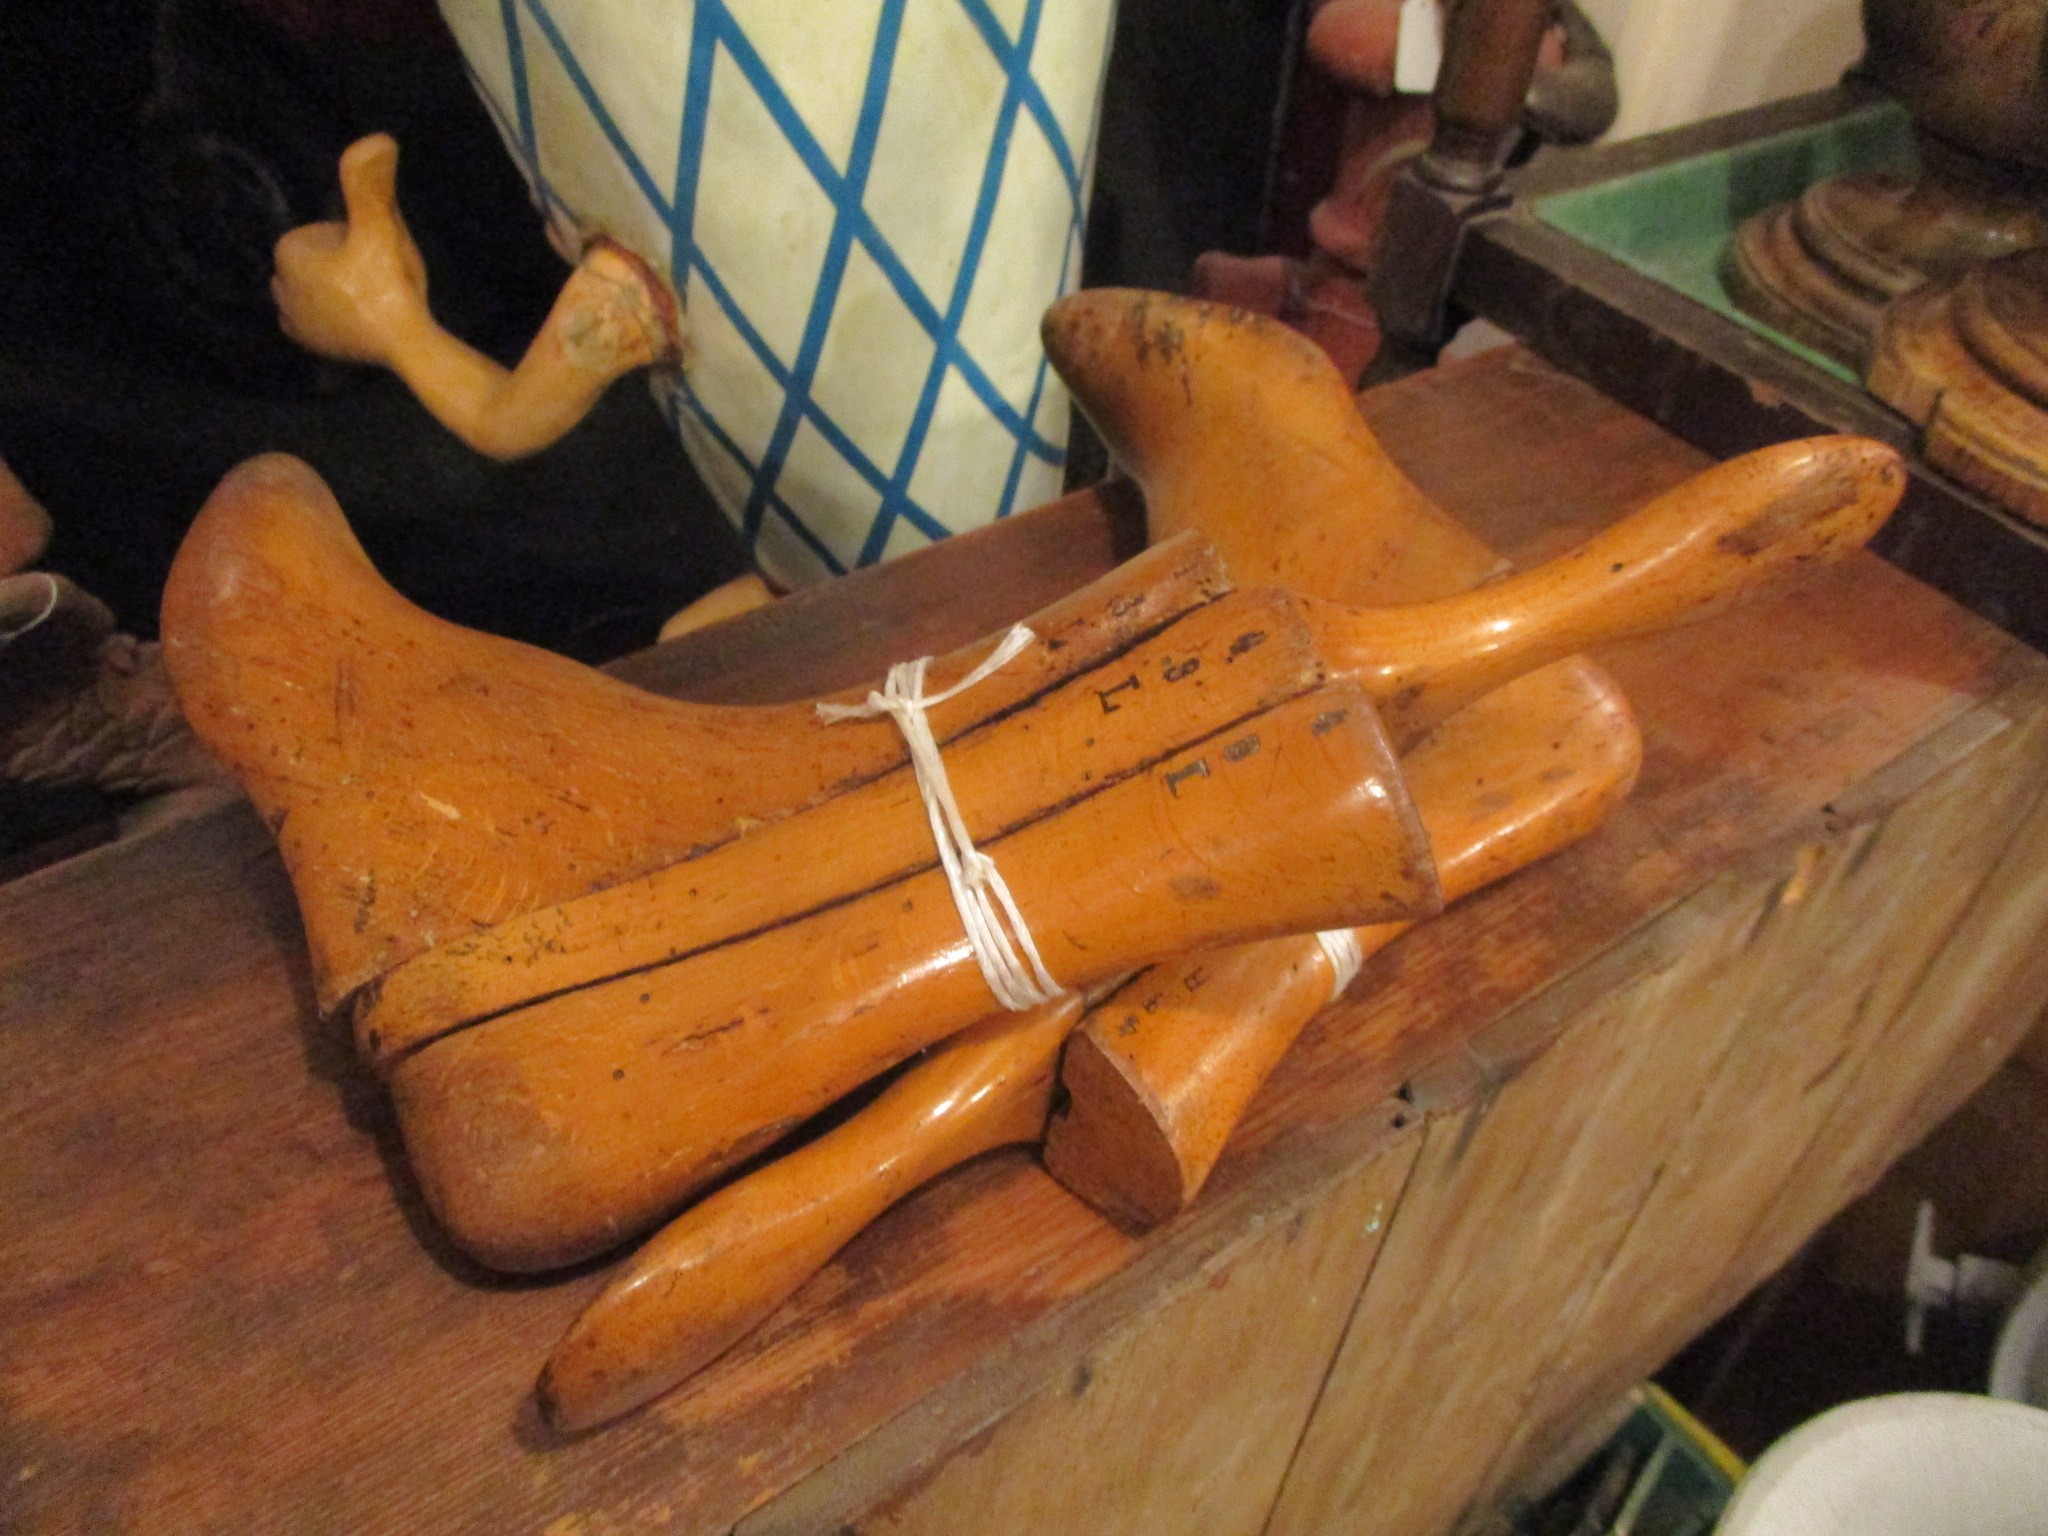 Boot lasts - vintage wooden type